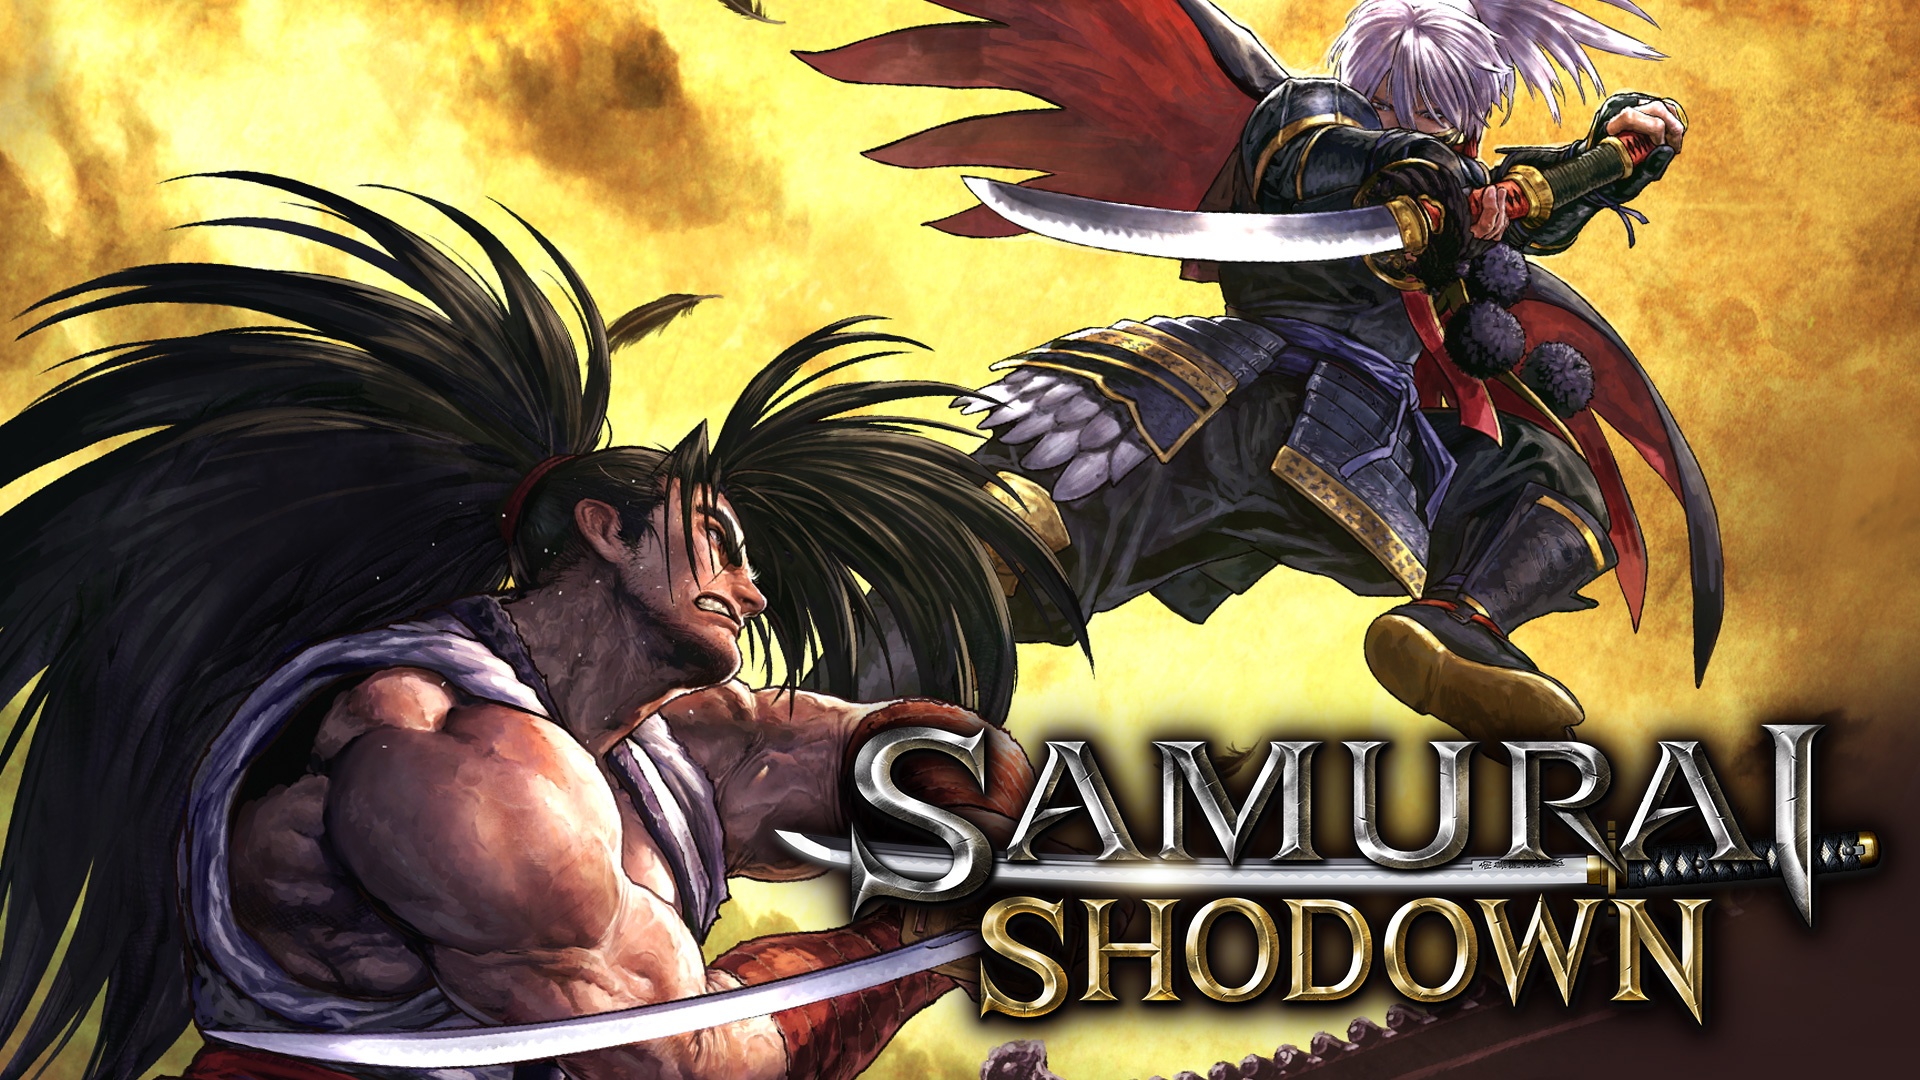 Samurai Shodown Nintendo Switch Announcement Trailer